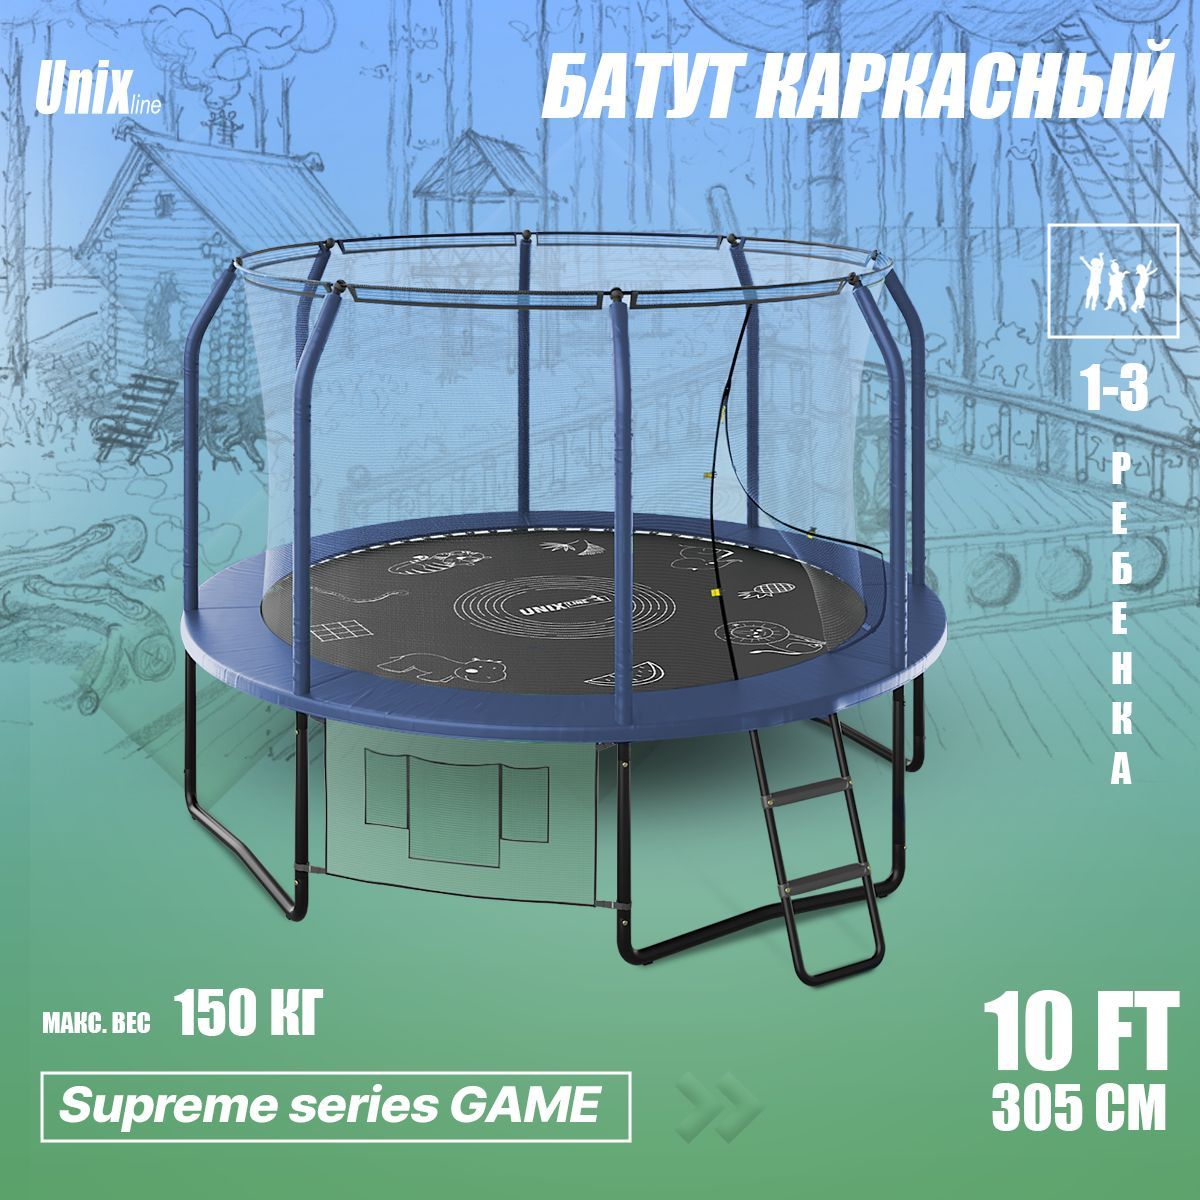 Unix line supreme game. Unix line Supreme game 10 ft.